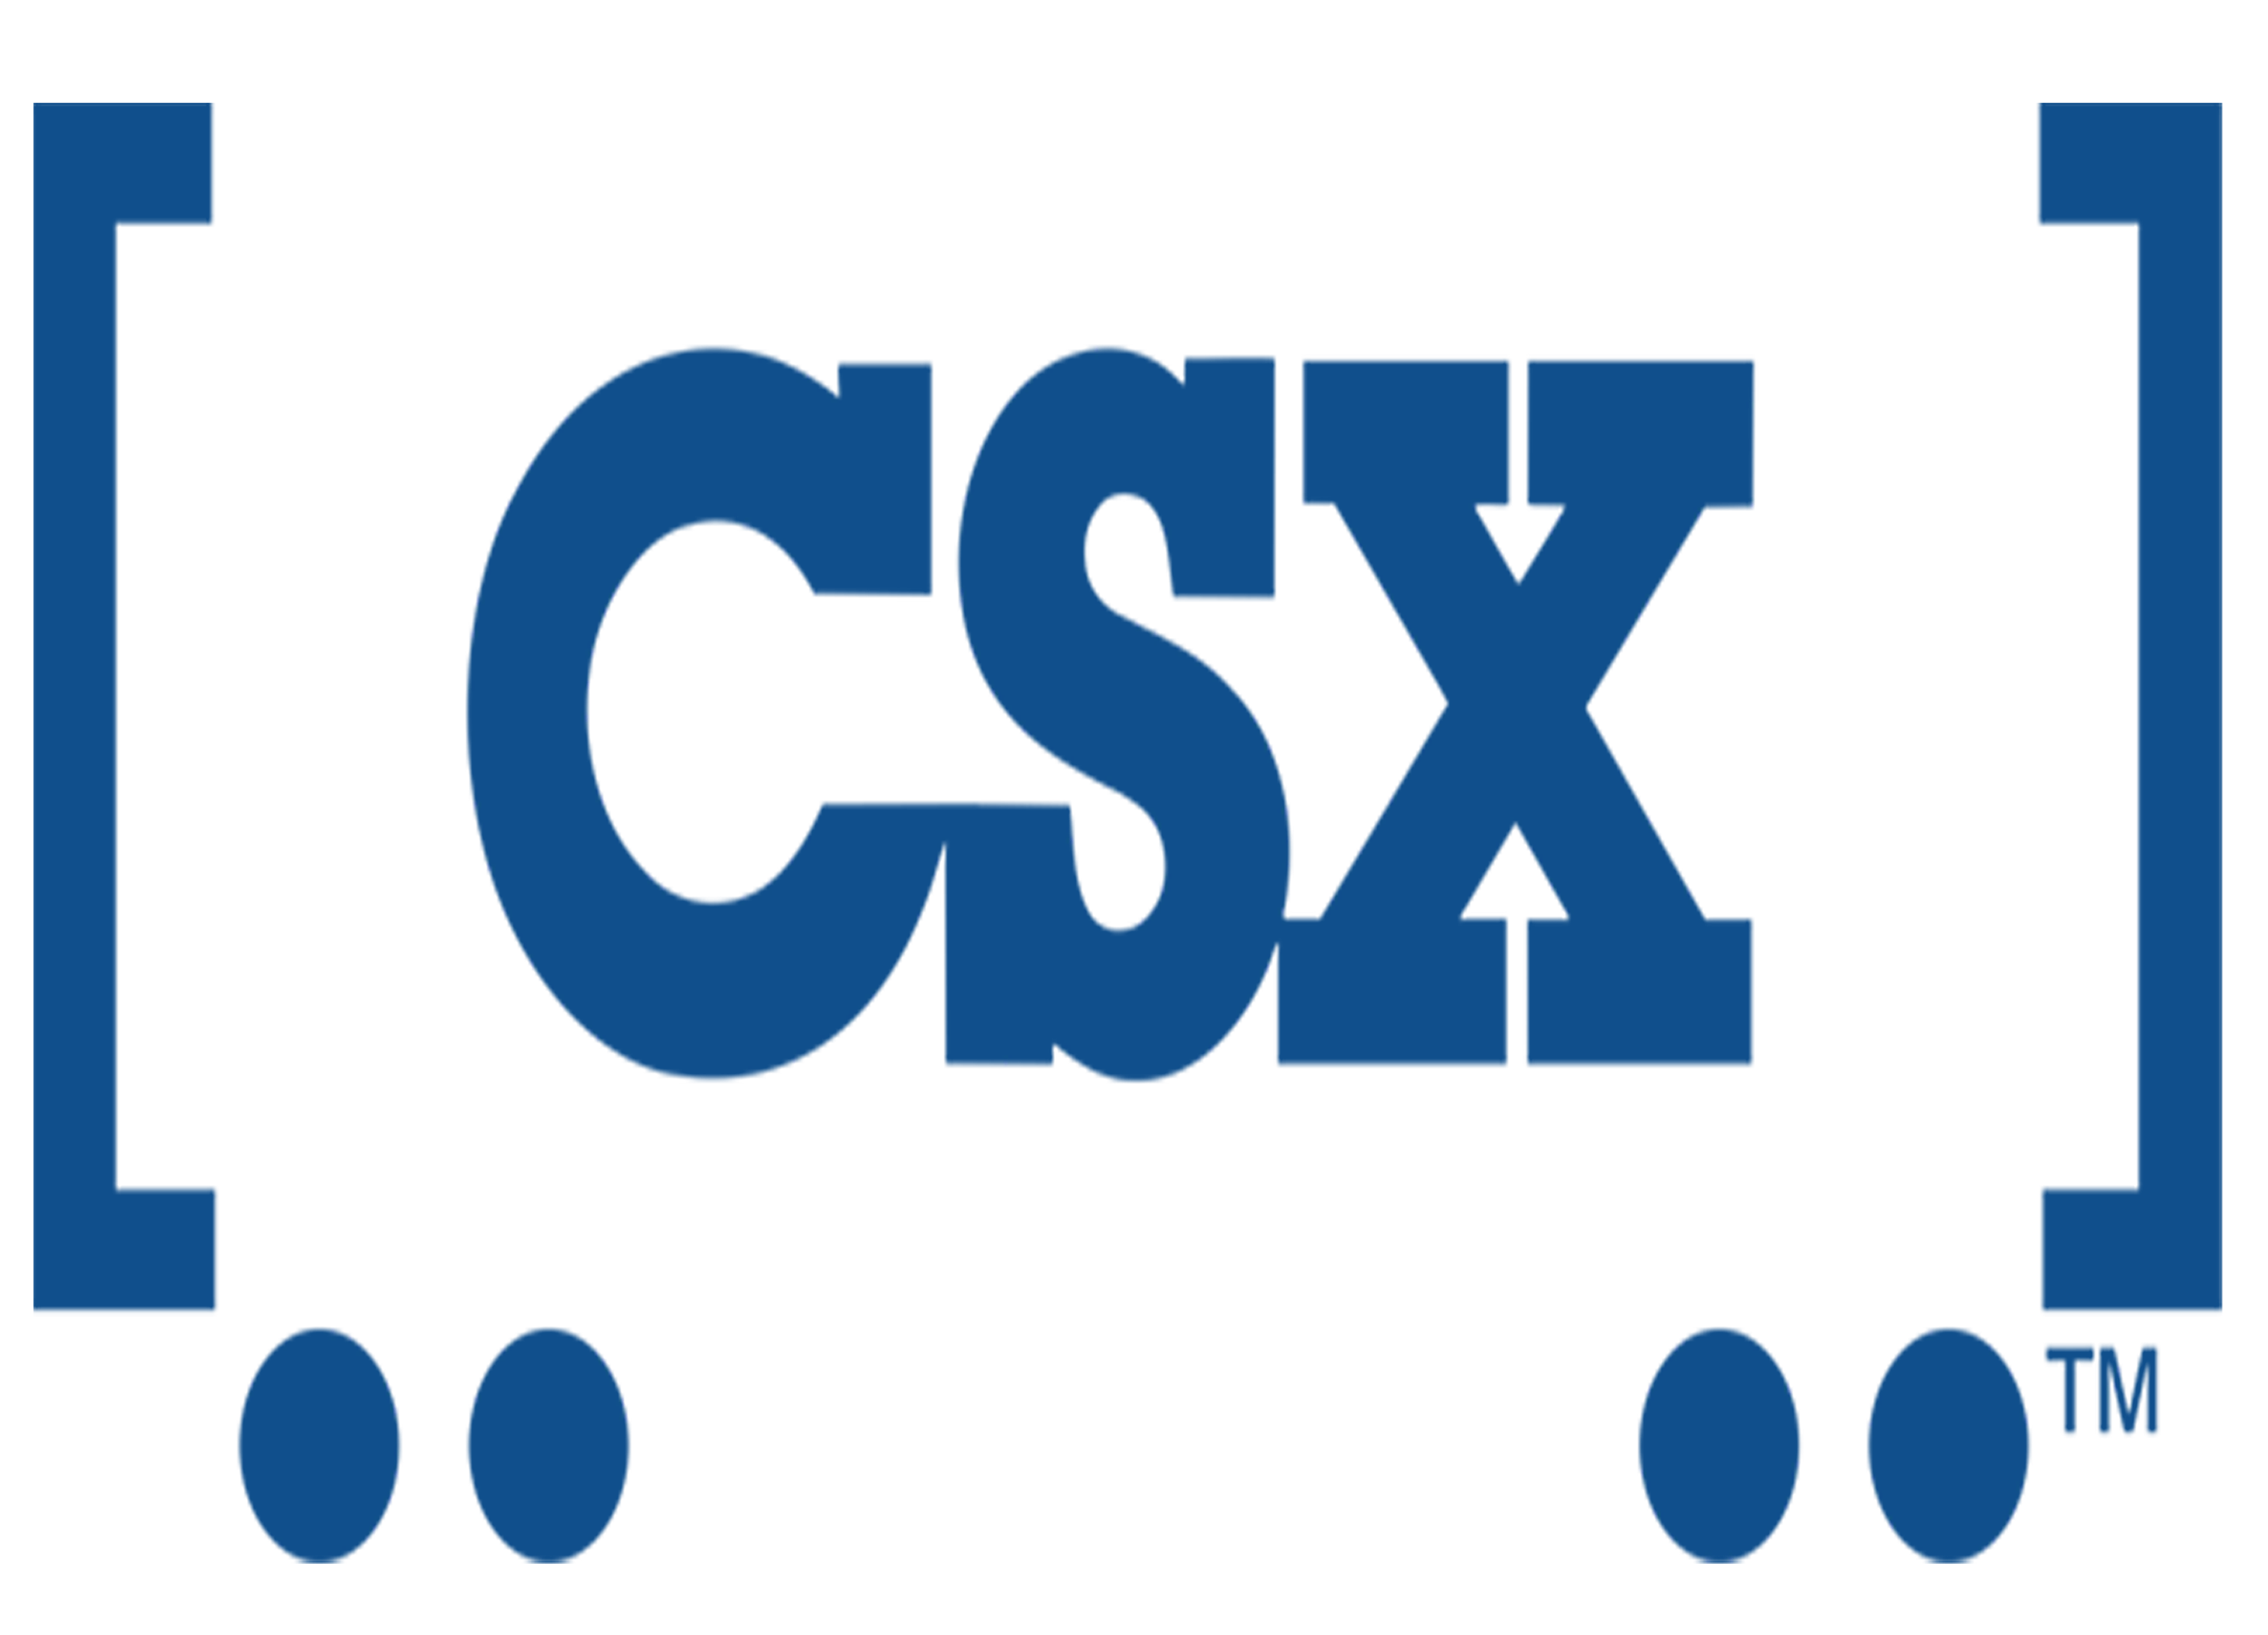 CSX_transp_logo.svg